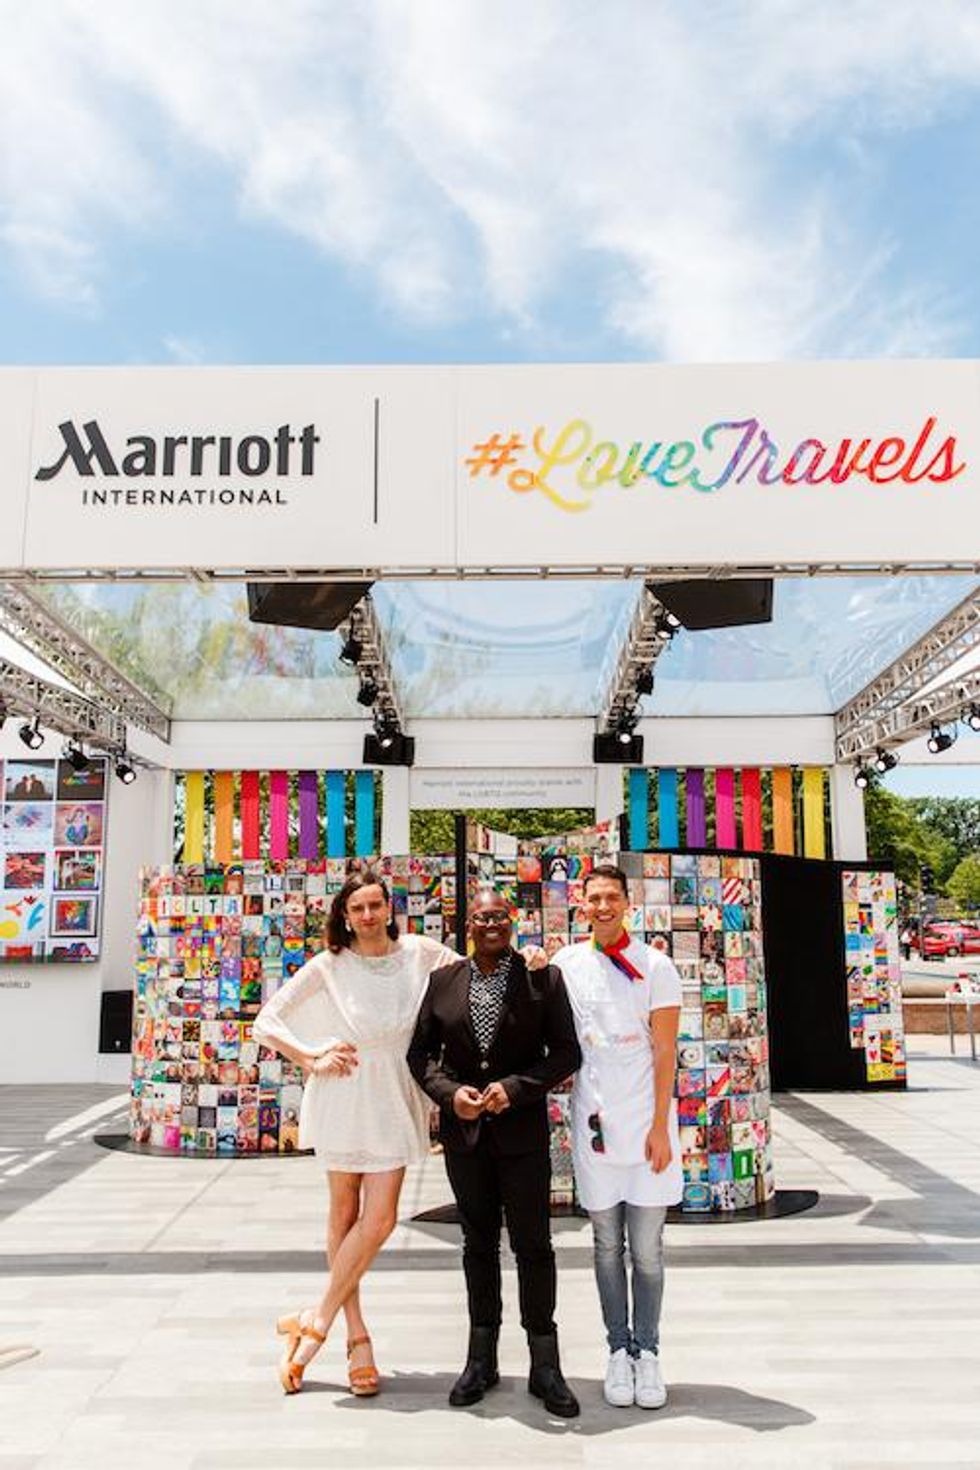 Marriott #LoveTravels